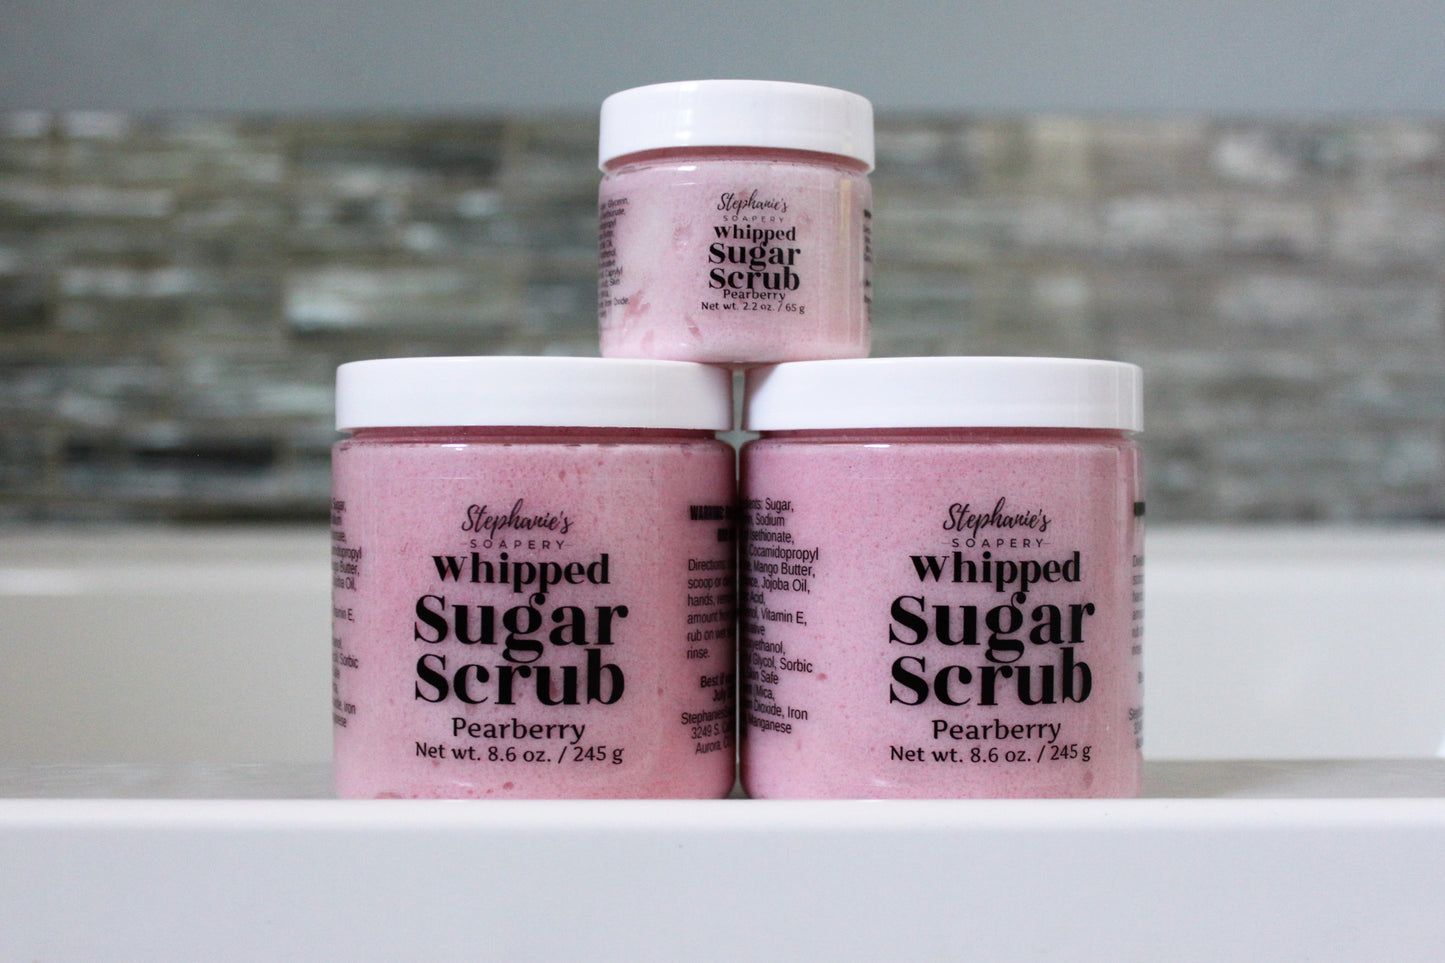 Pearberry Sugar Scrub